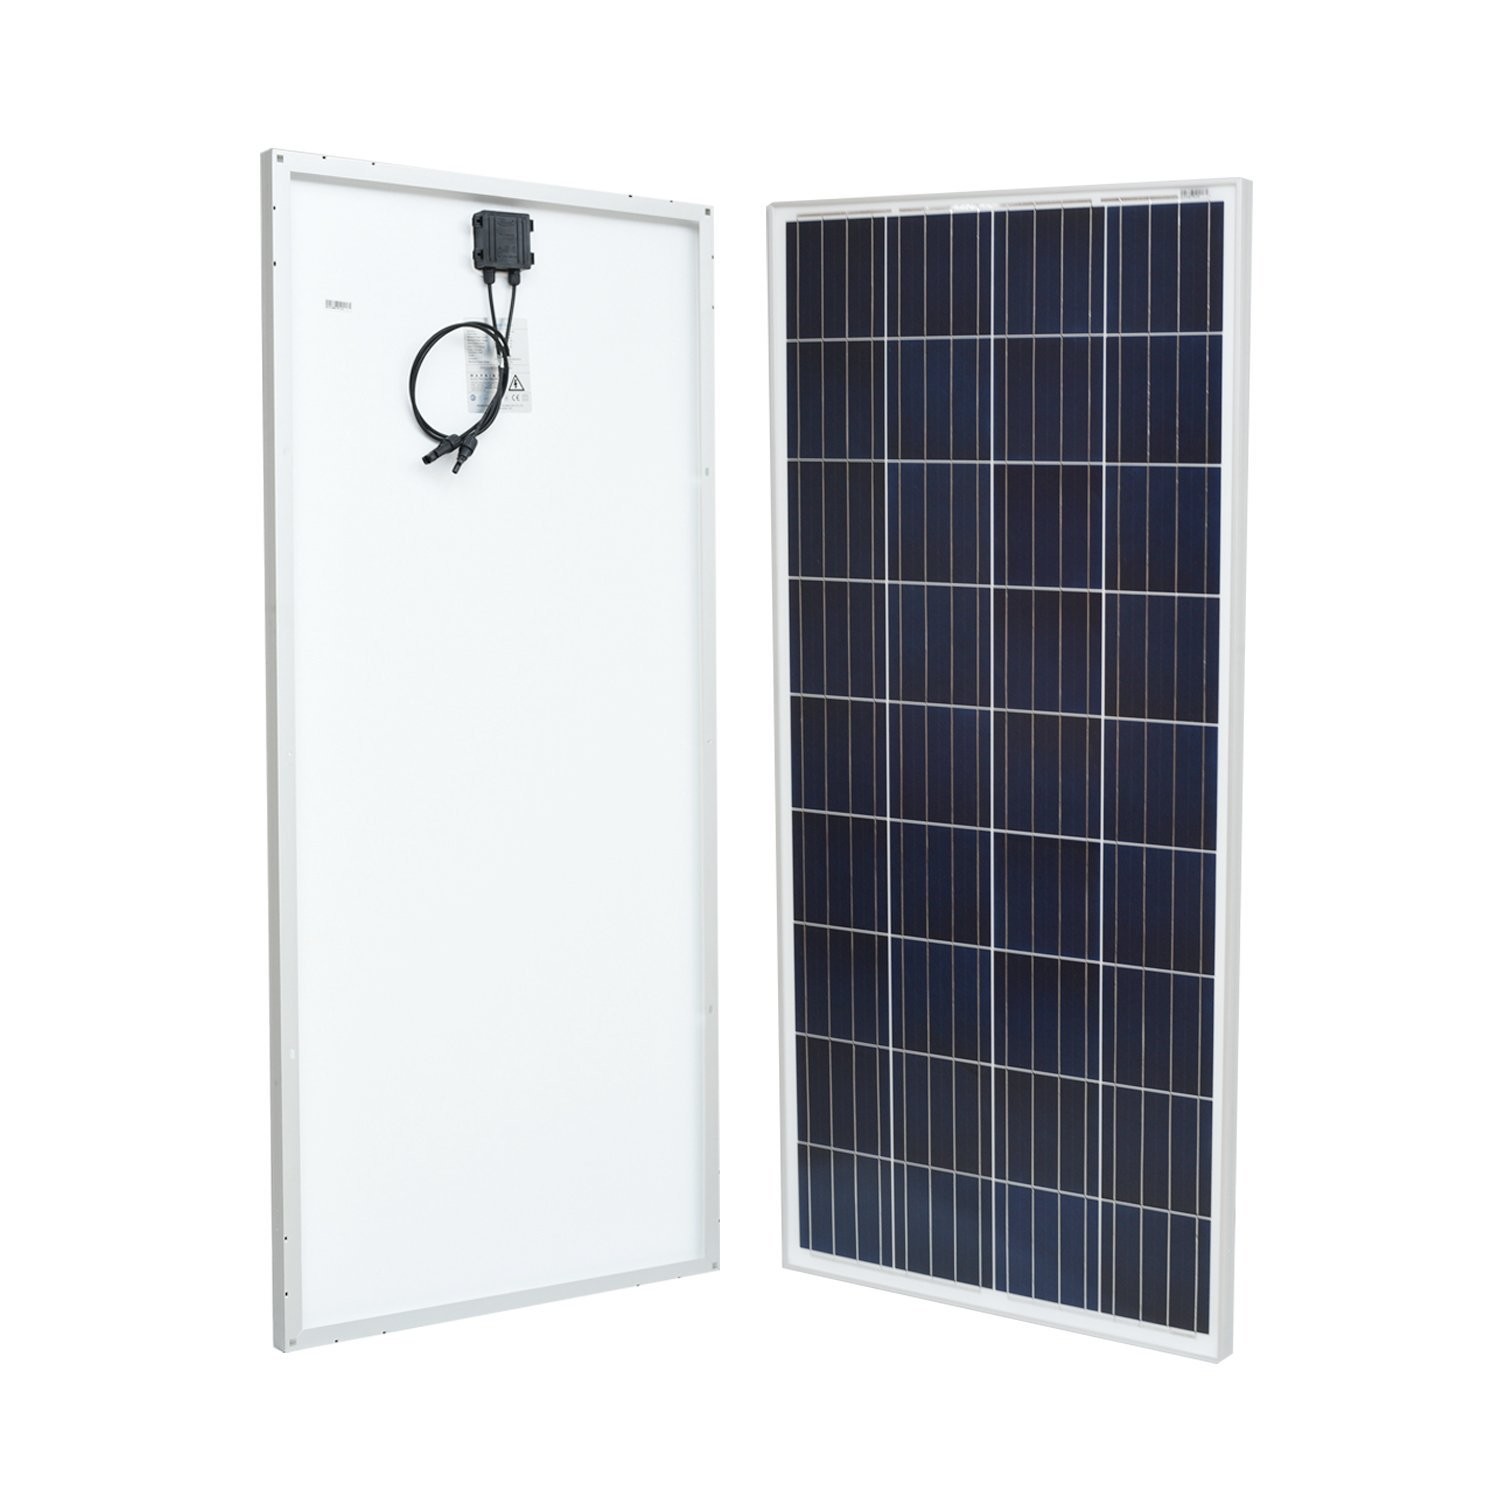 Durable Monocrystalline Solar Panel , High Efficiency 160W Monocrystalline Panels